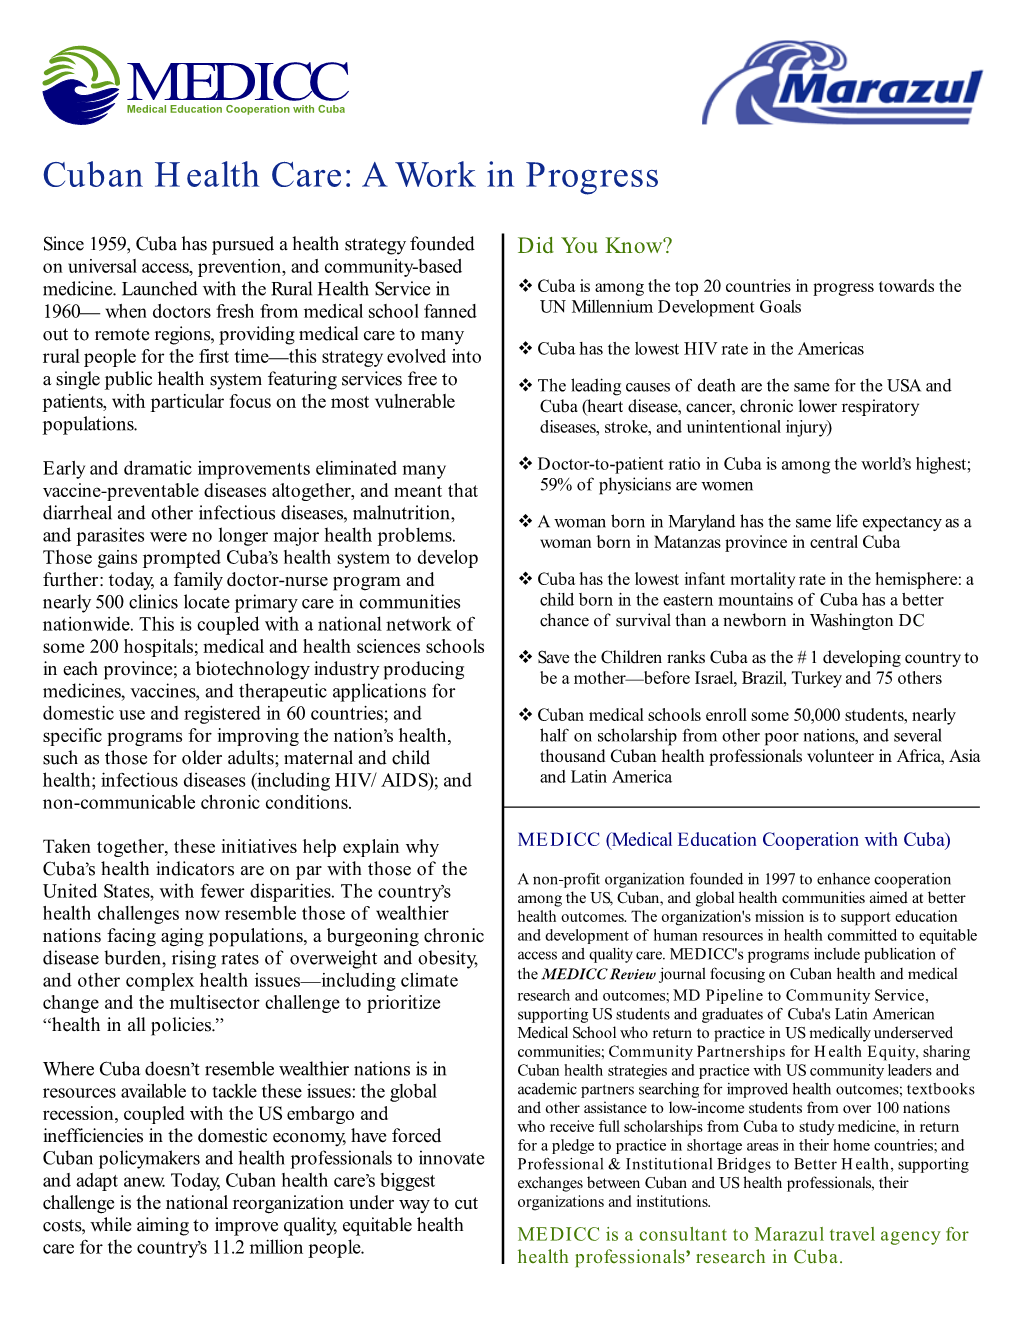 Cuban Health Care: a Work in Progress